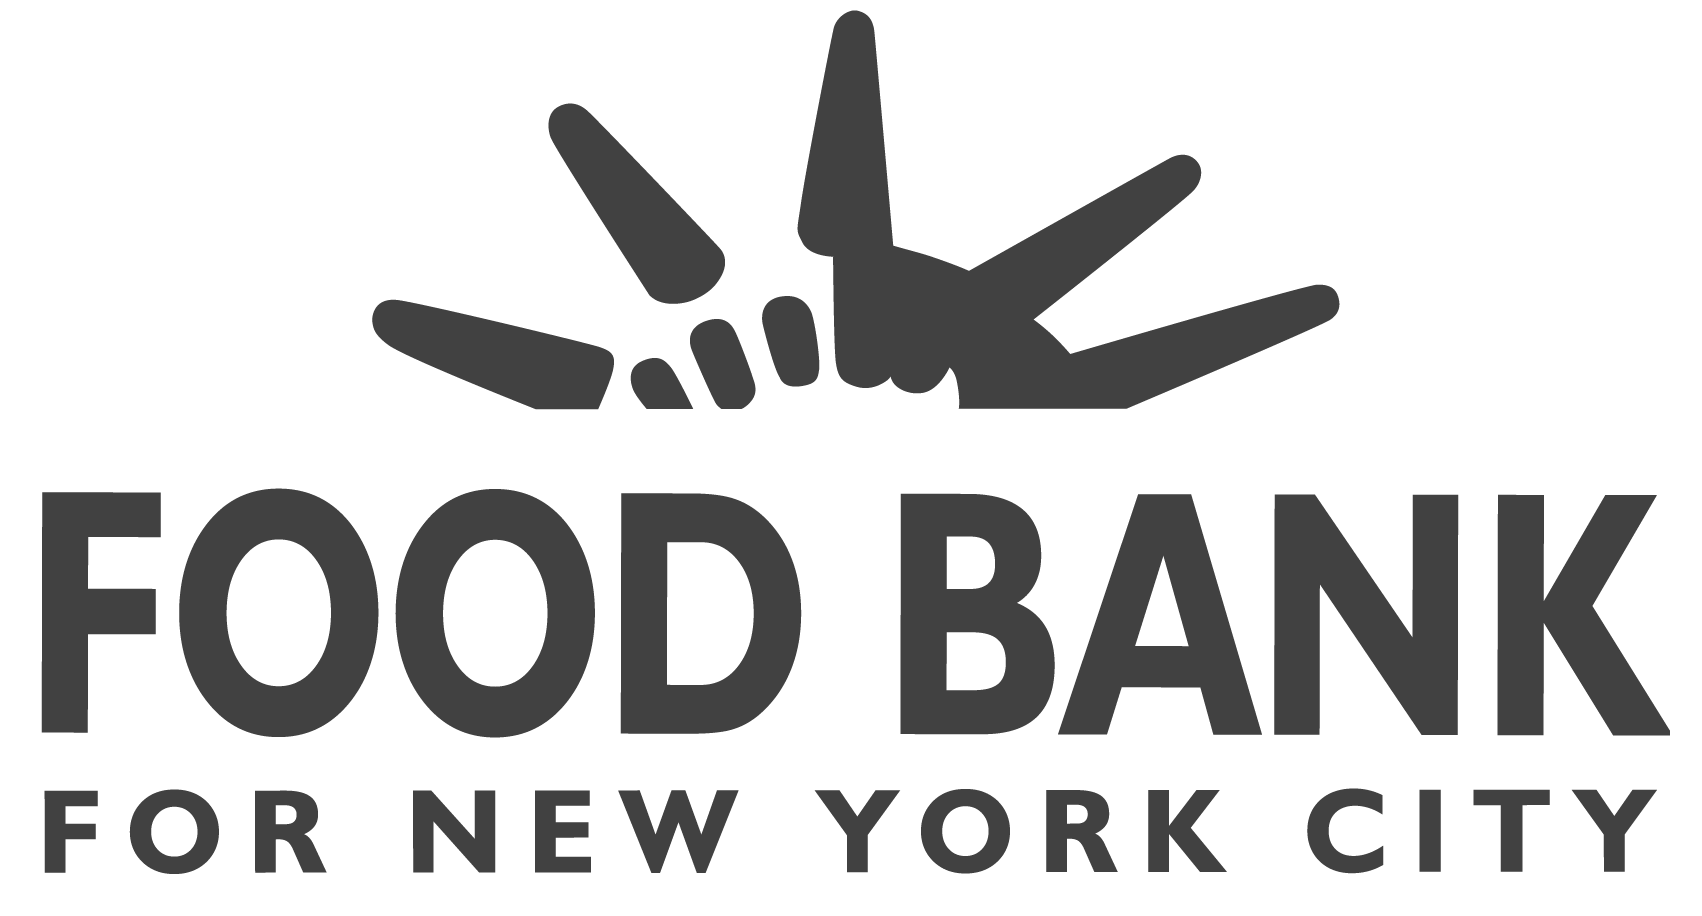 Food Bank for New York City logo